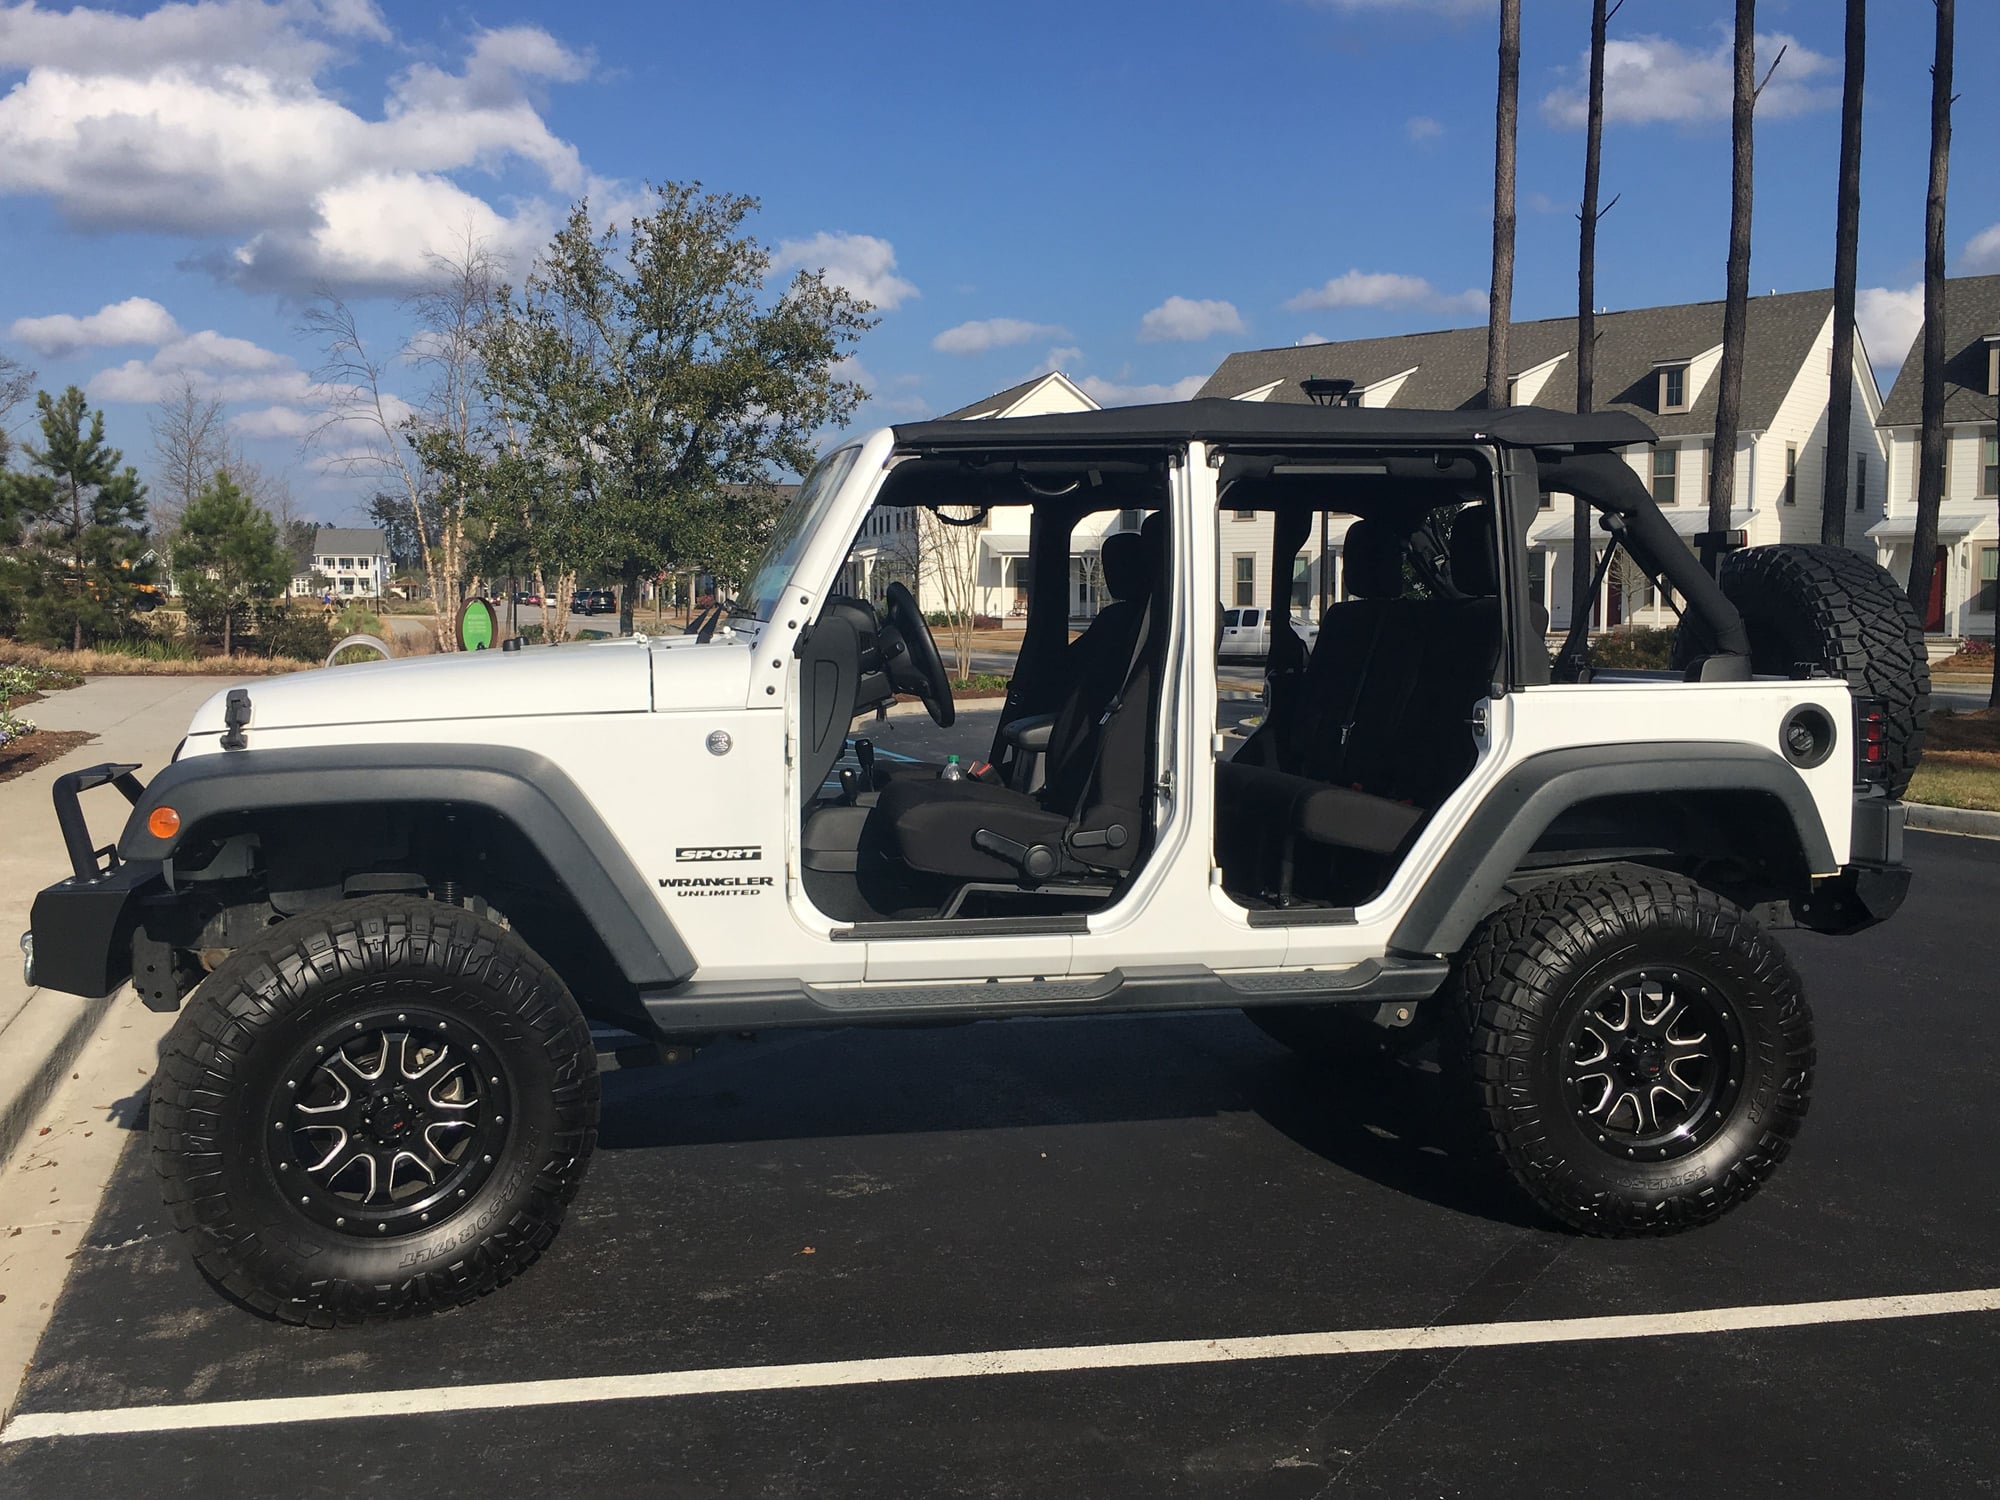 2015 Jeep Wrangler - 2015 jku - Used - VIN 1c4bjwdg2fl521535 - 64,000 Miles - 6 cyl - 4WD - Automatic - SUV - White - Summerville, SC 29486, United States